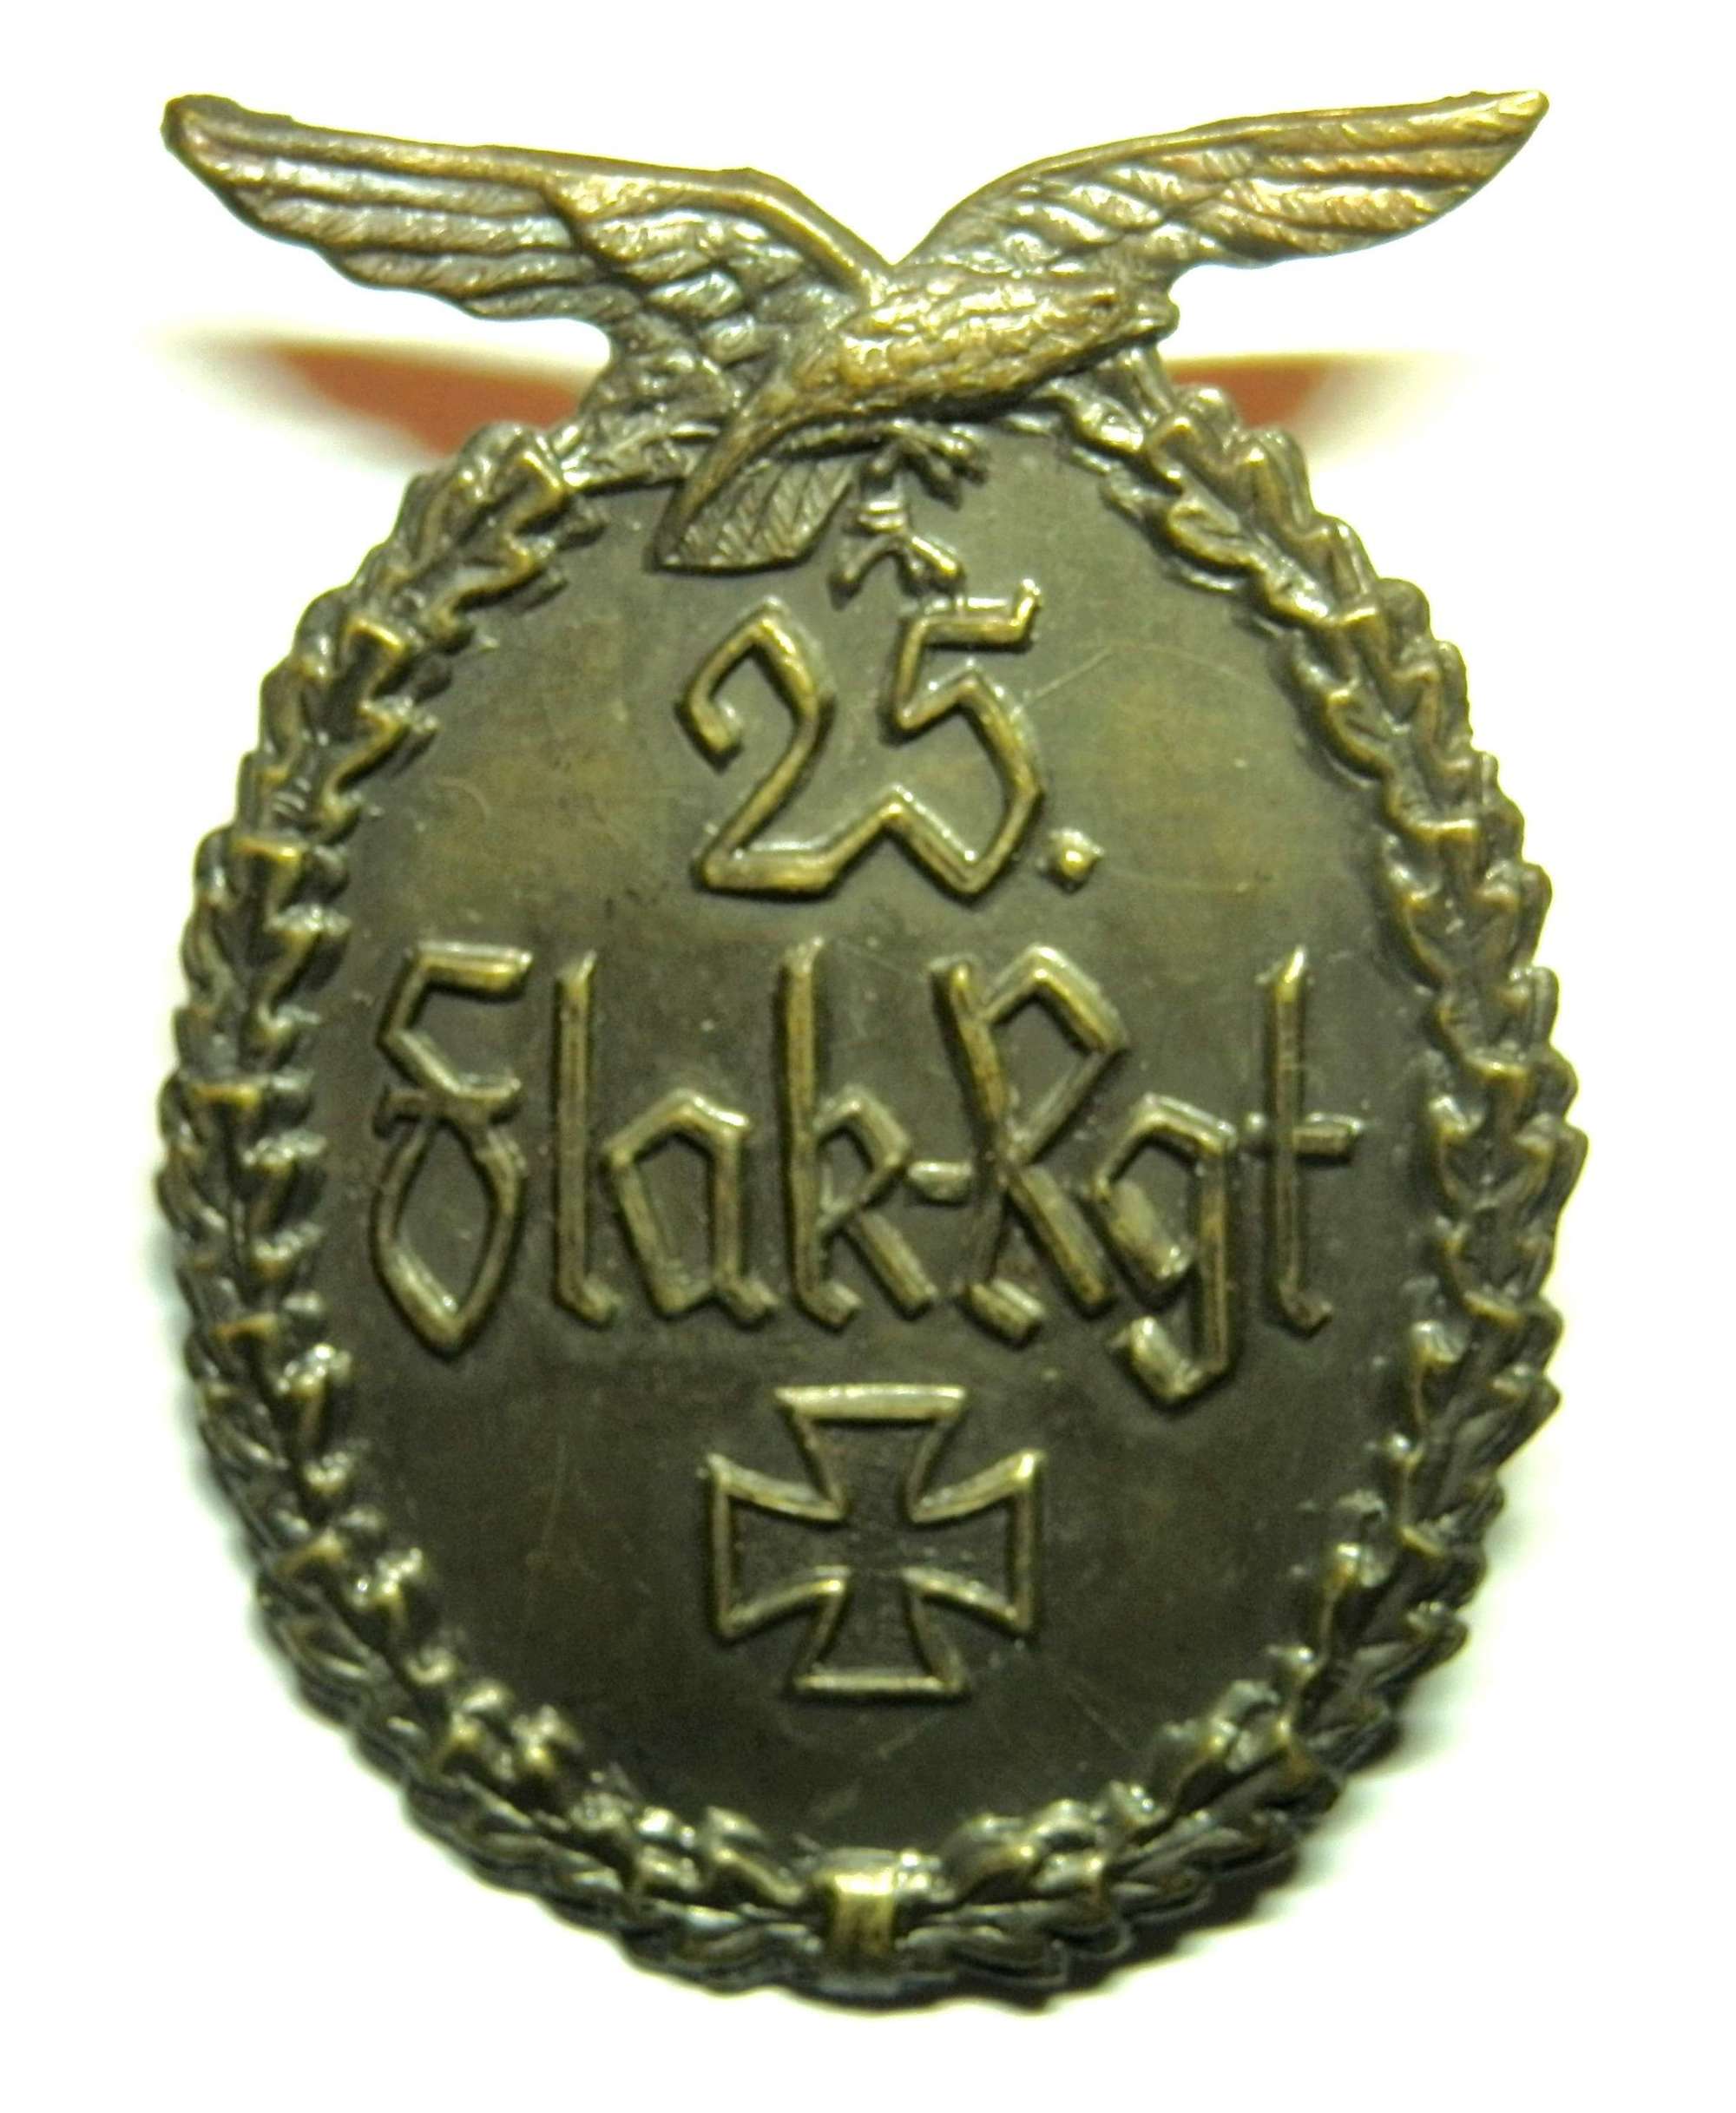 Luftwaffe ‘25 Flak-Rgt’ 'Flak-Artillerie’ Commemorative Badge.